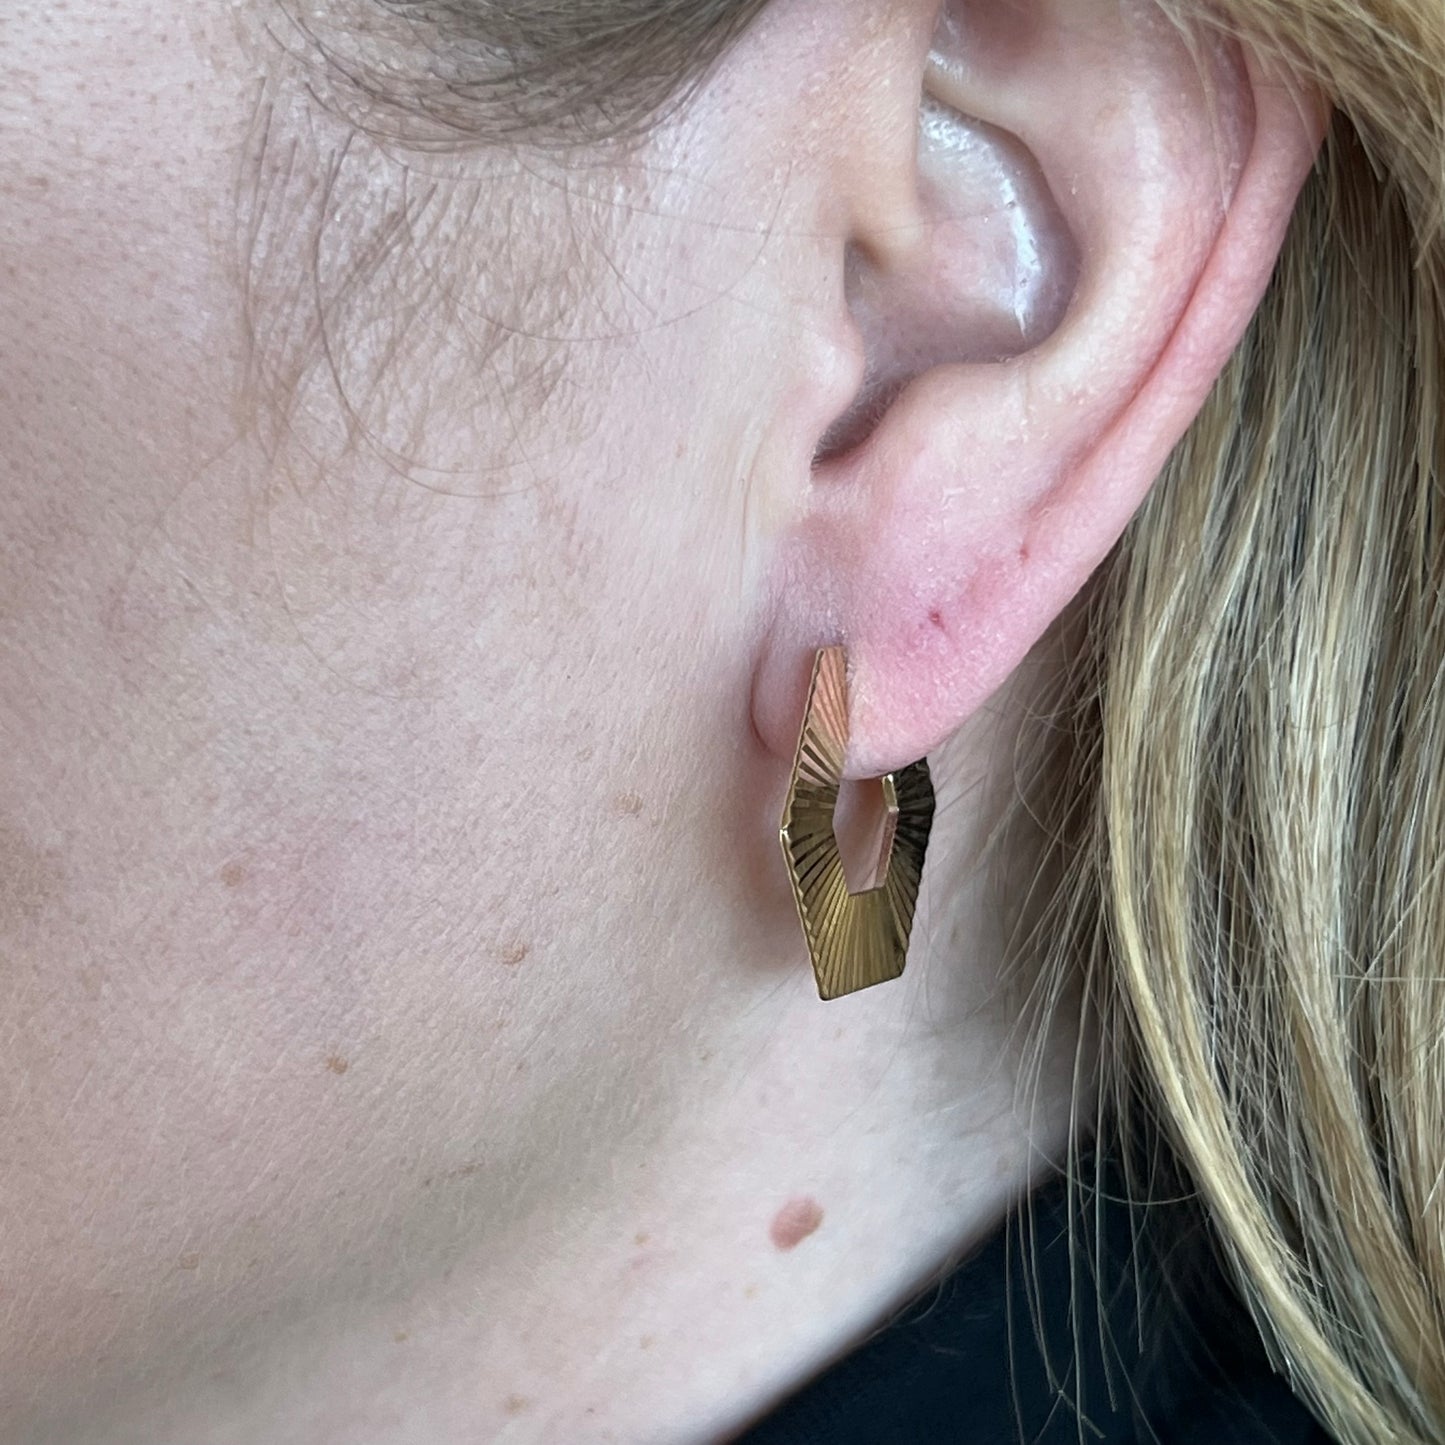 Textured Geometric Hoop Earrings in 14k Yellow Gold